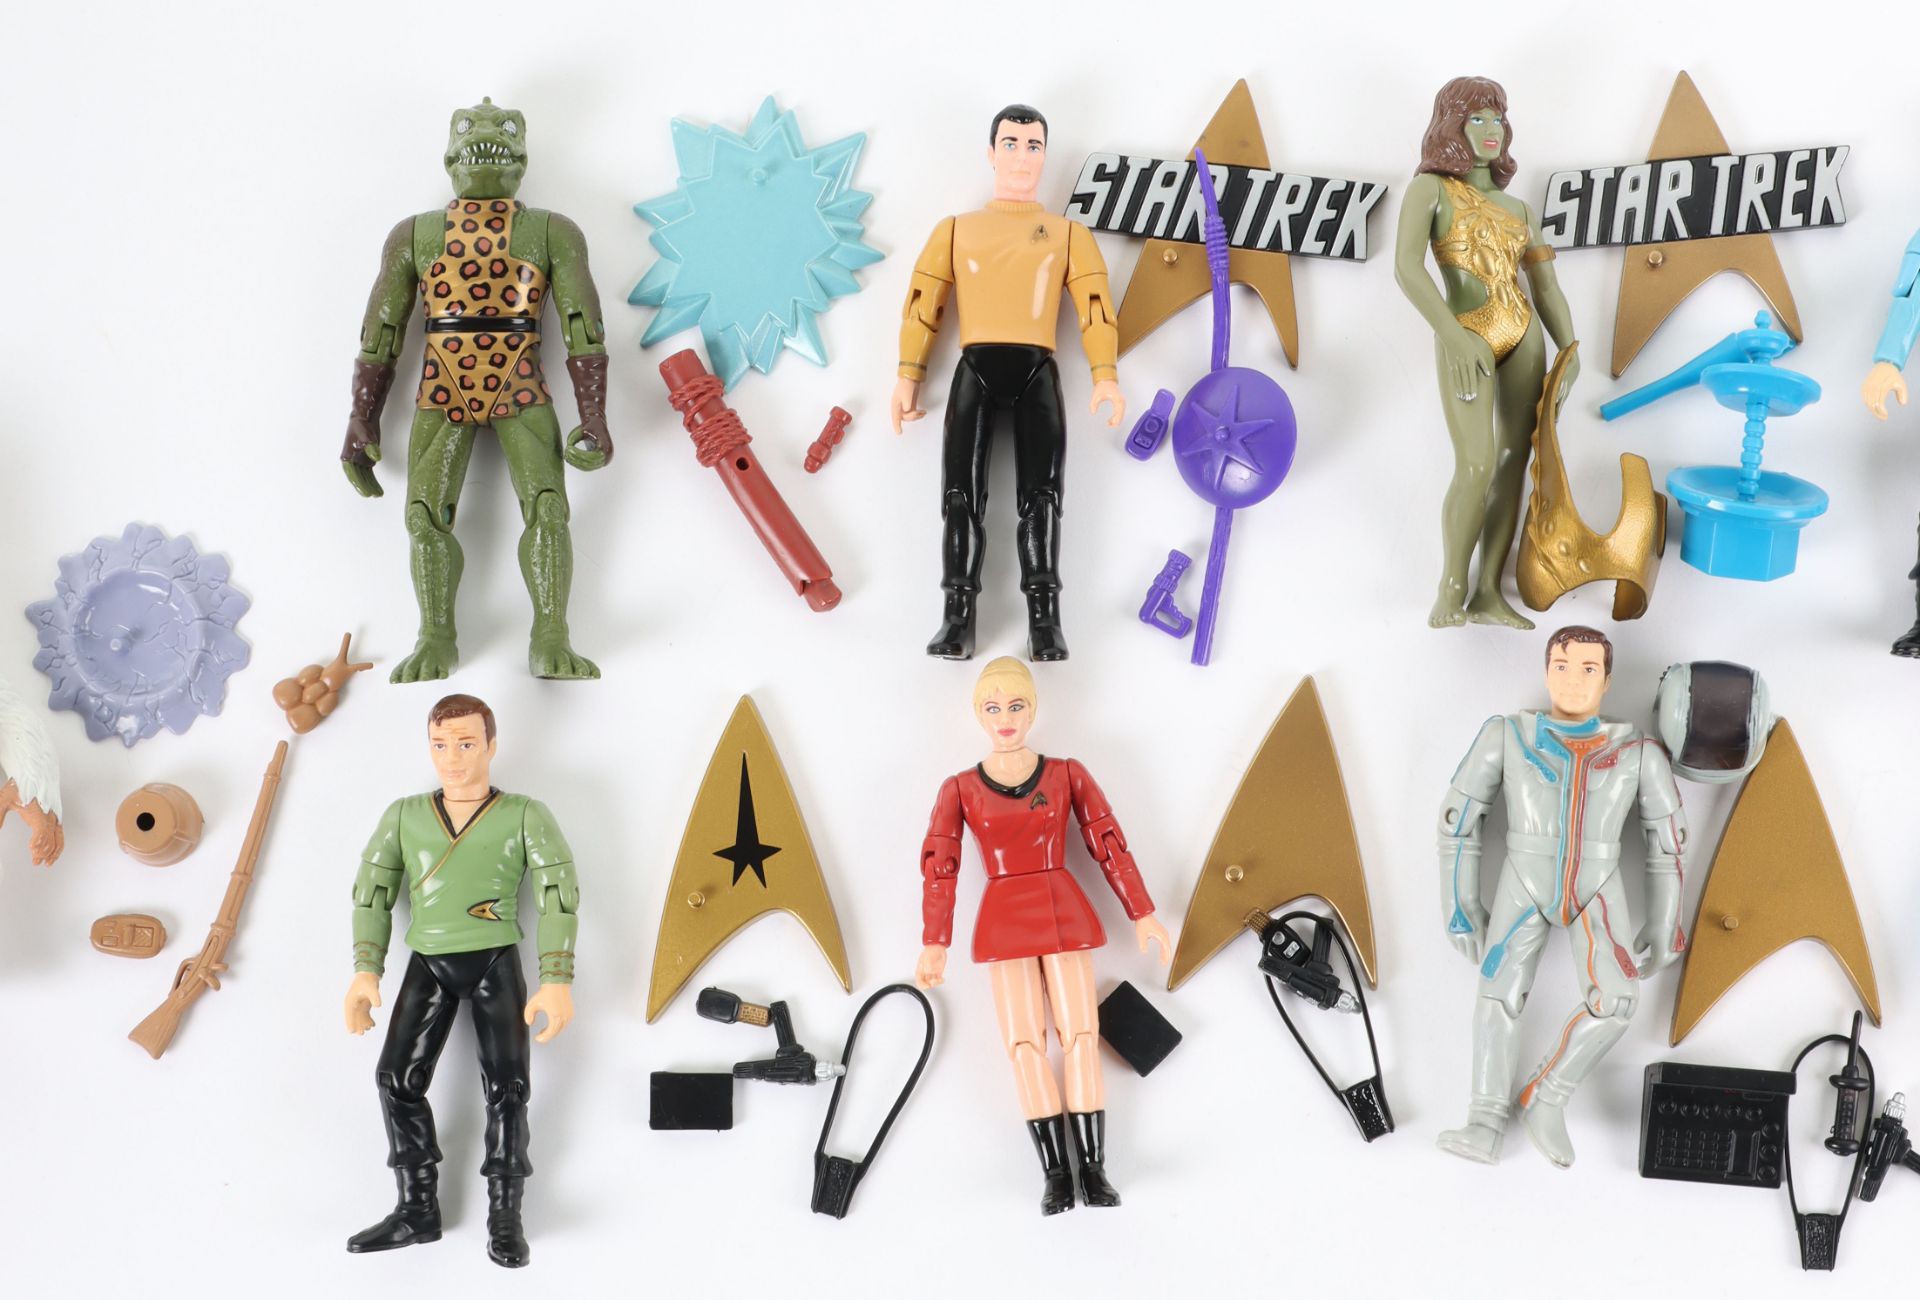 Star Trek The original series playmates figures - Image 5 of 6